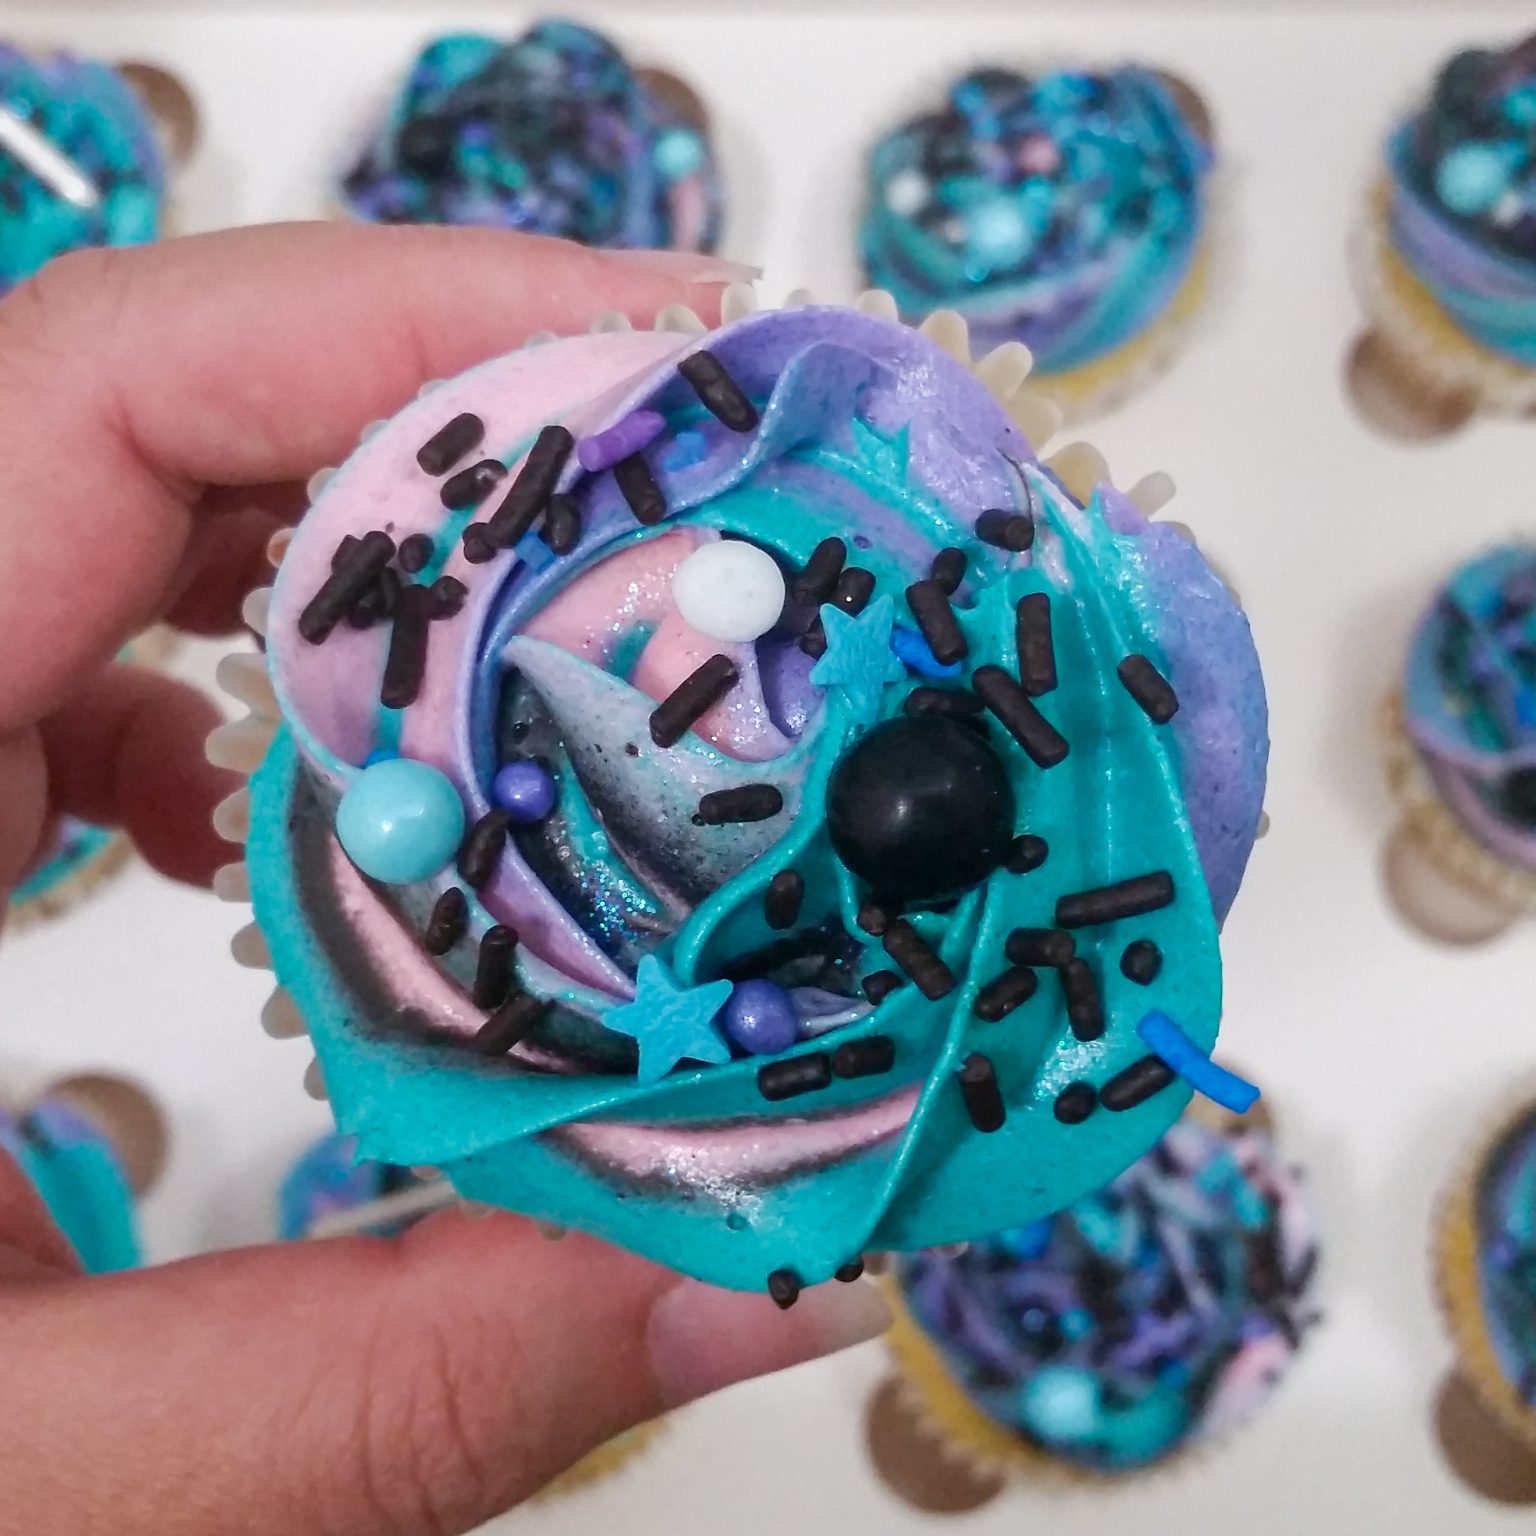 Galaxy cupcakes